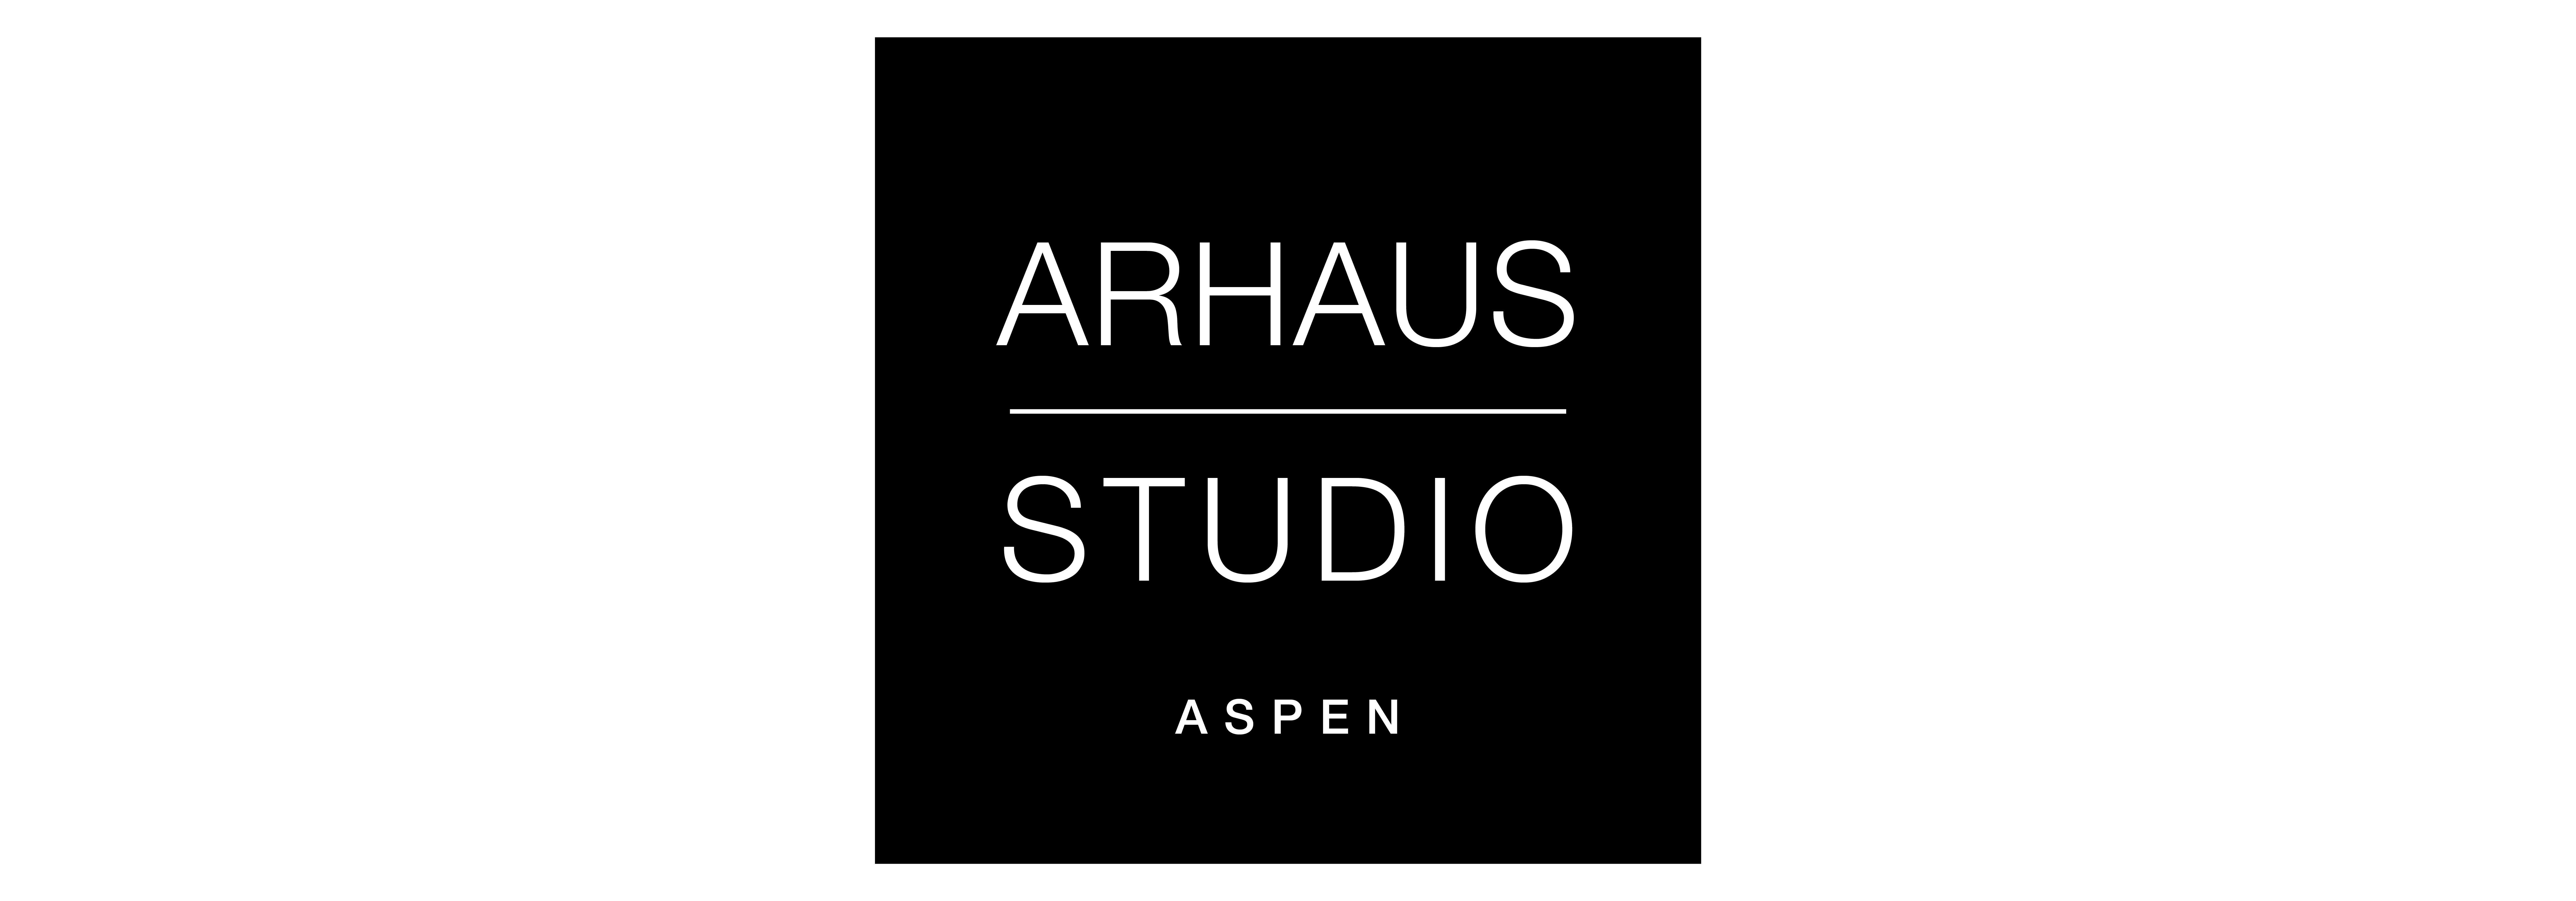 Arhaus Studio logo